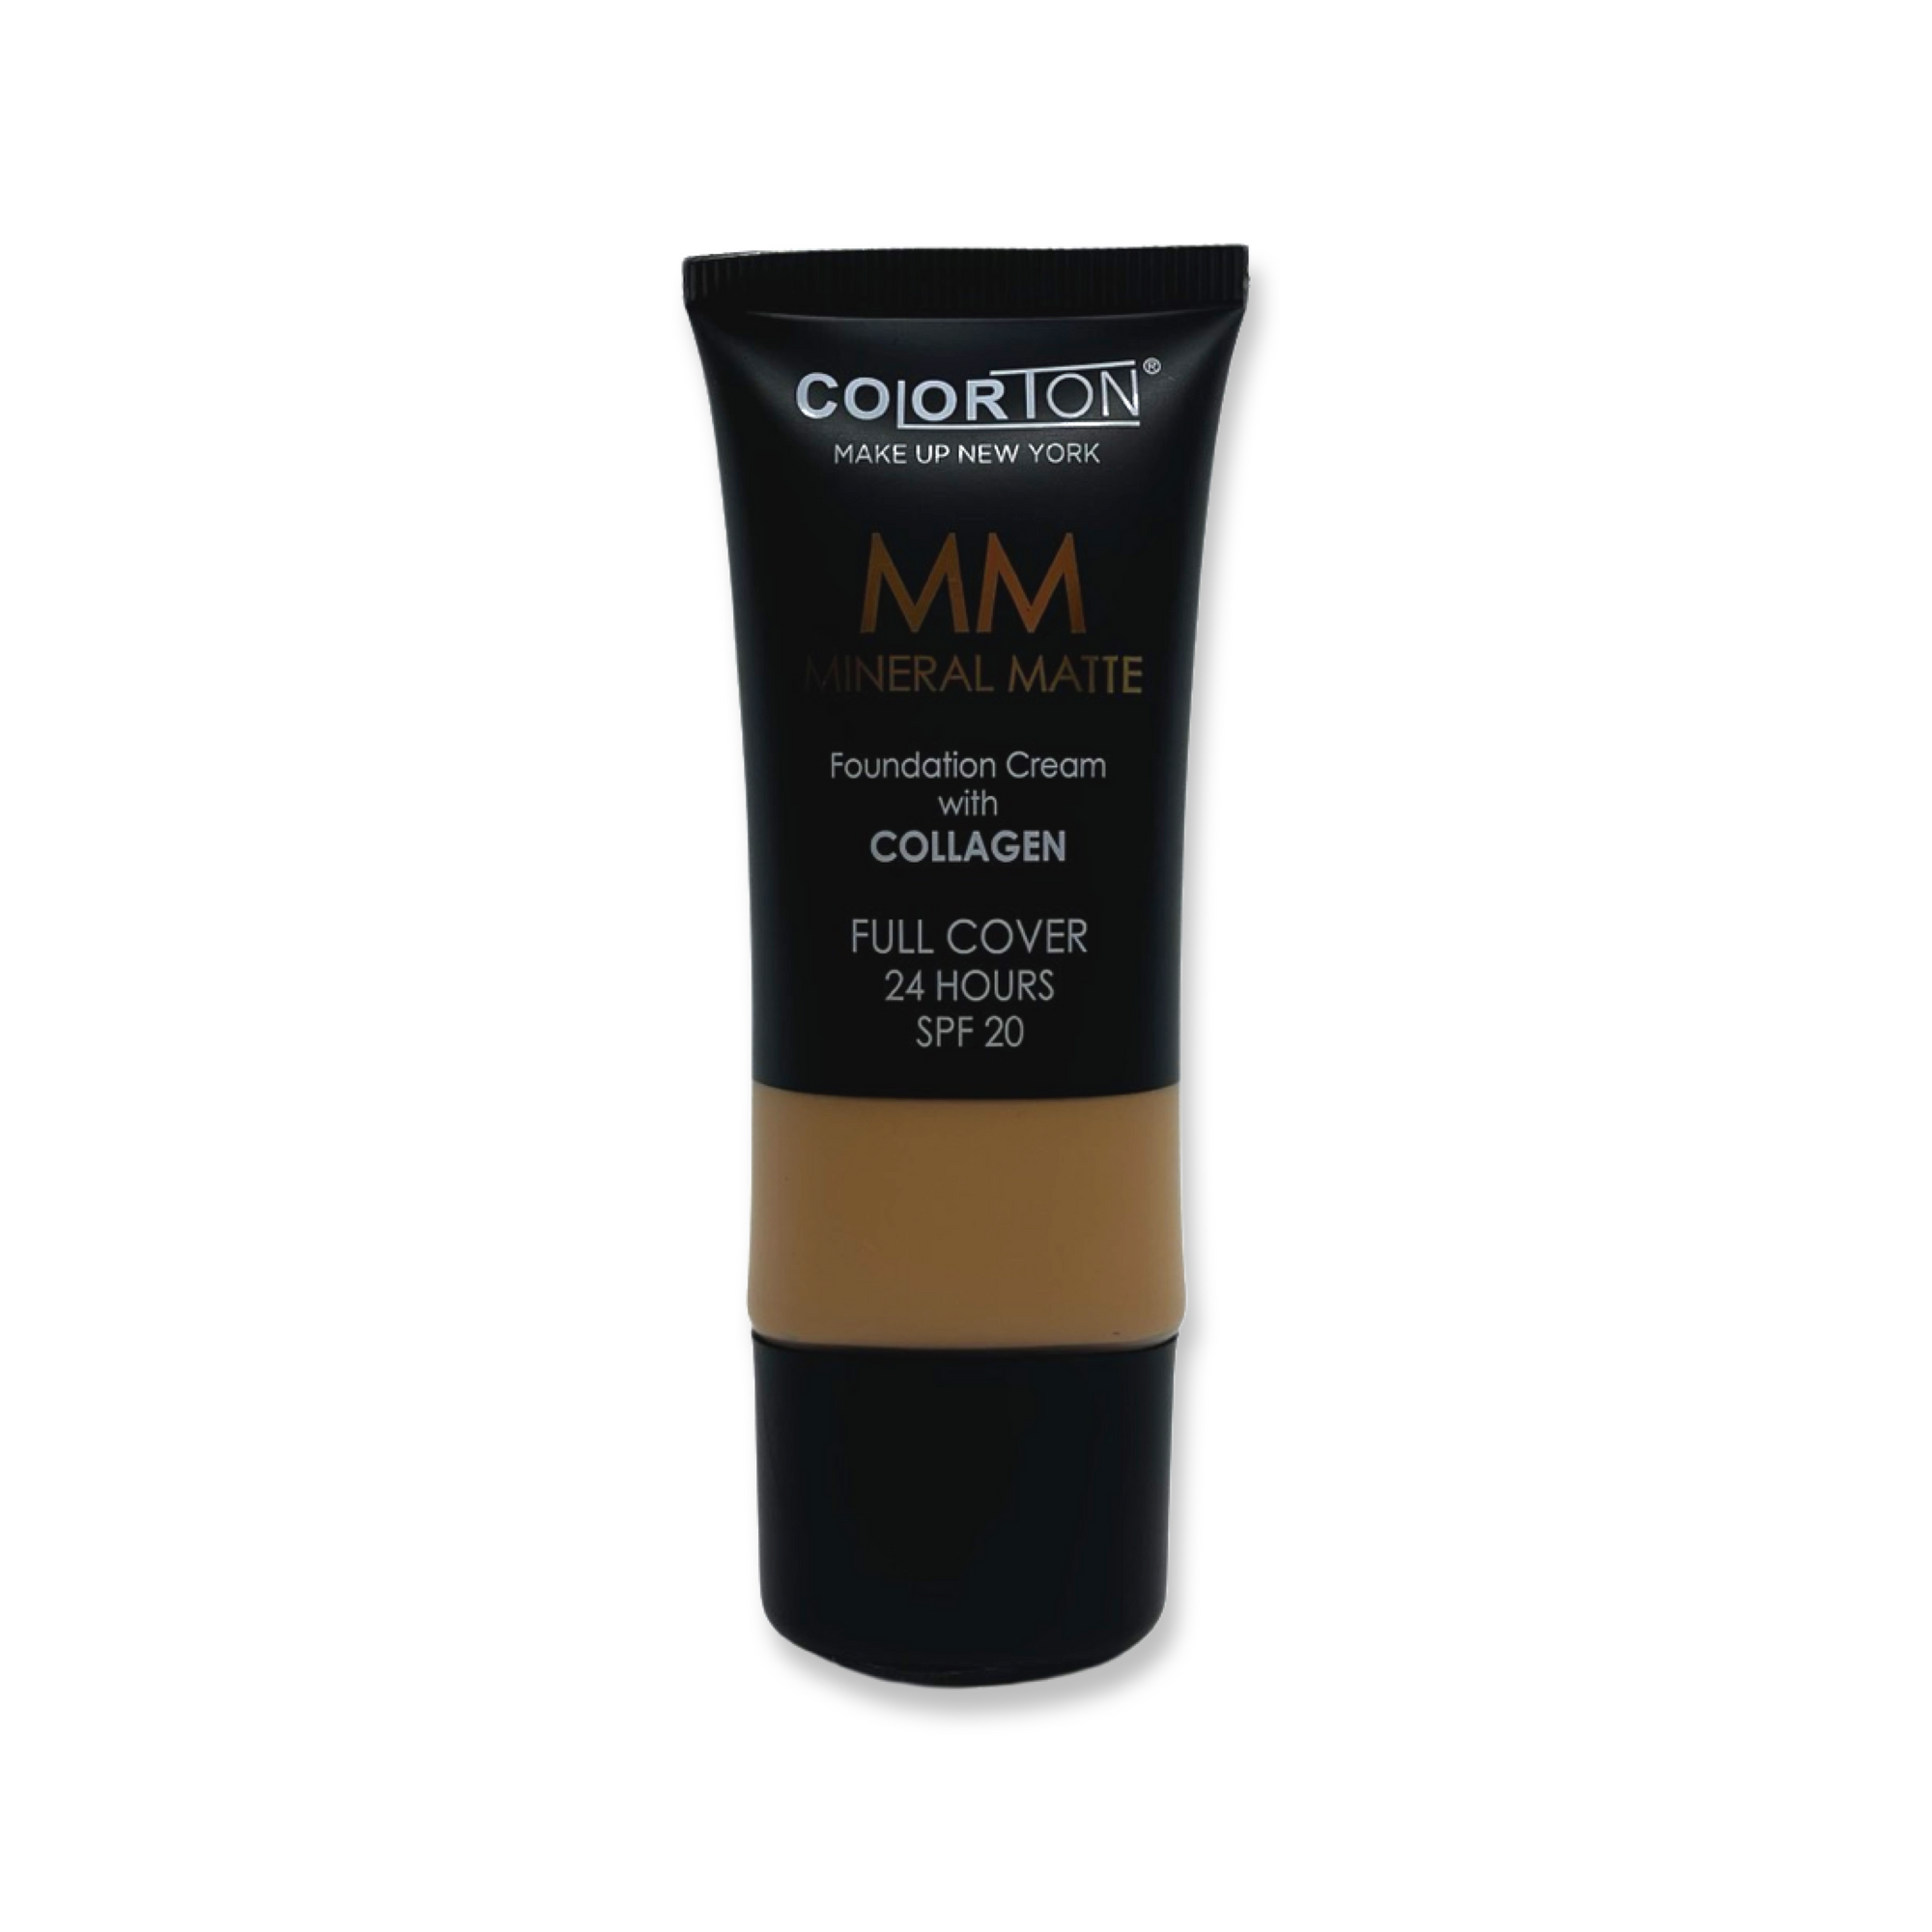 Maquillaje líquido mineral mate con colágeno - Colorton